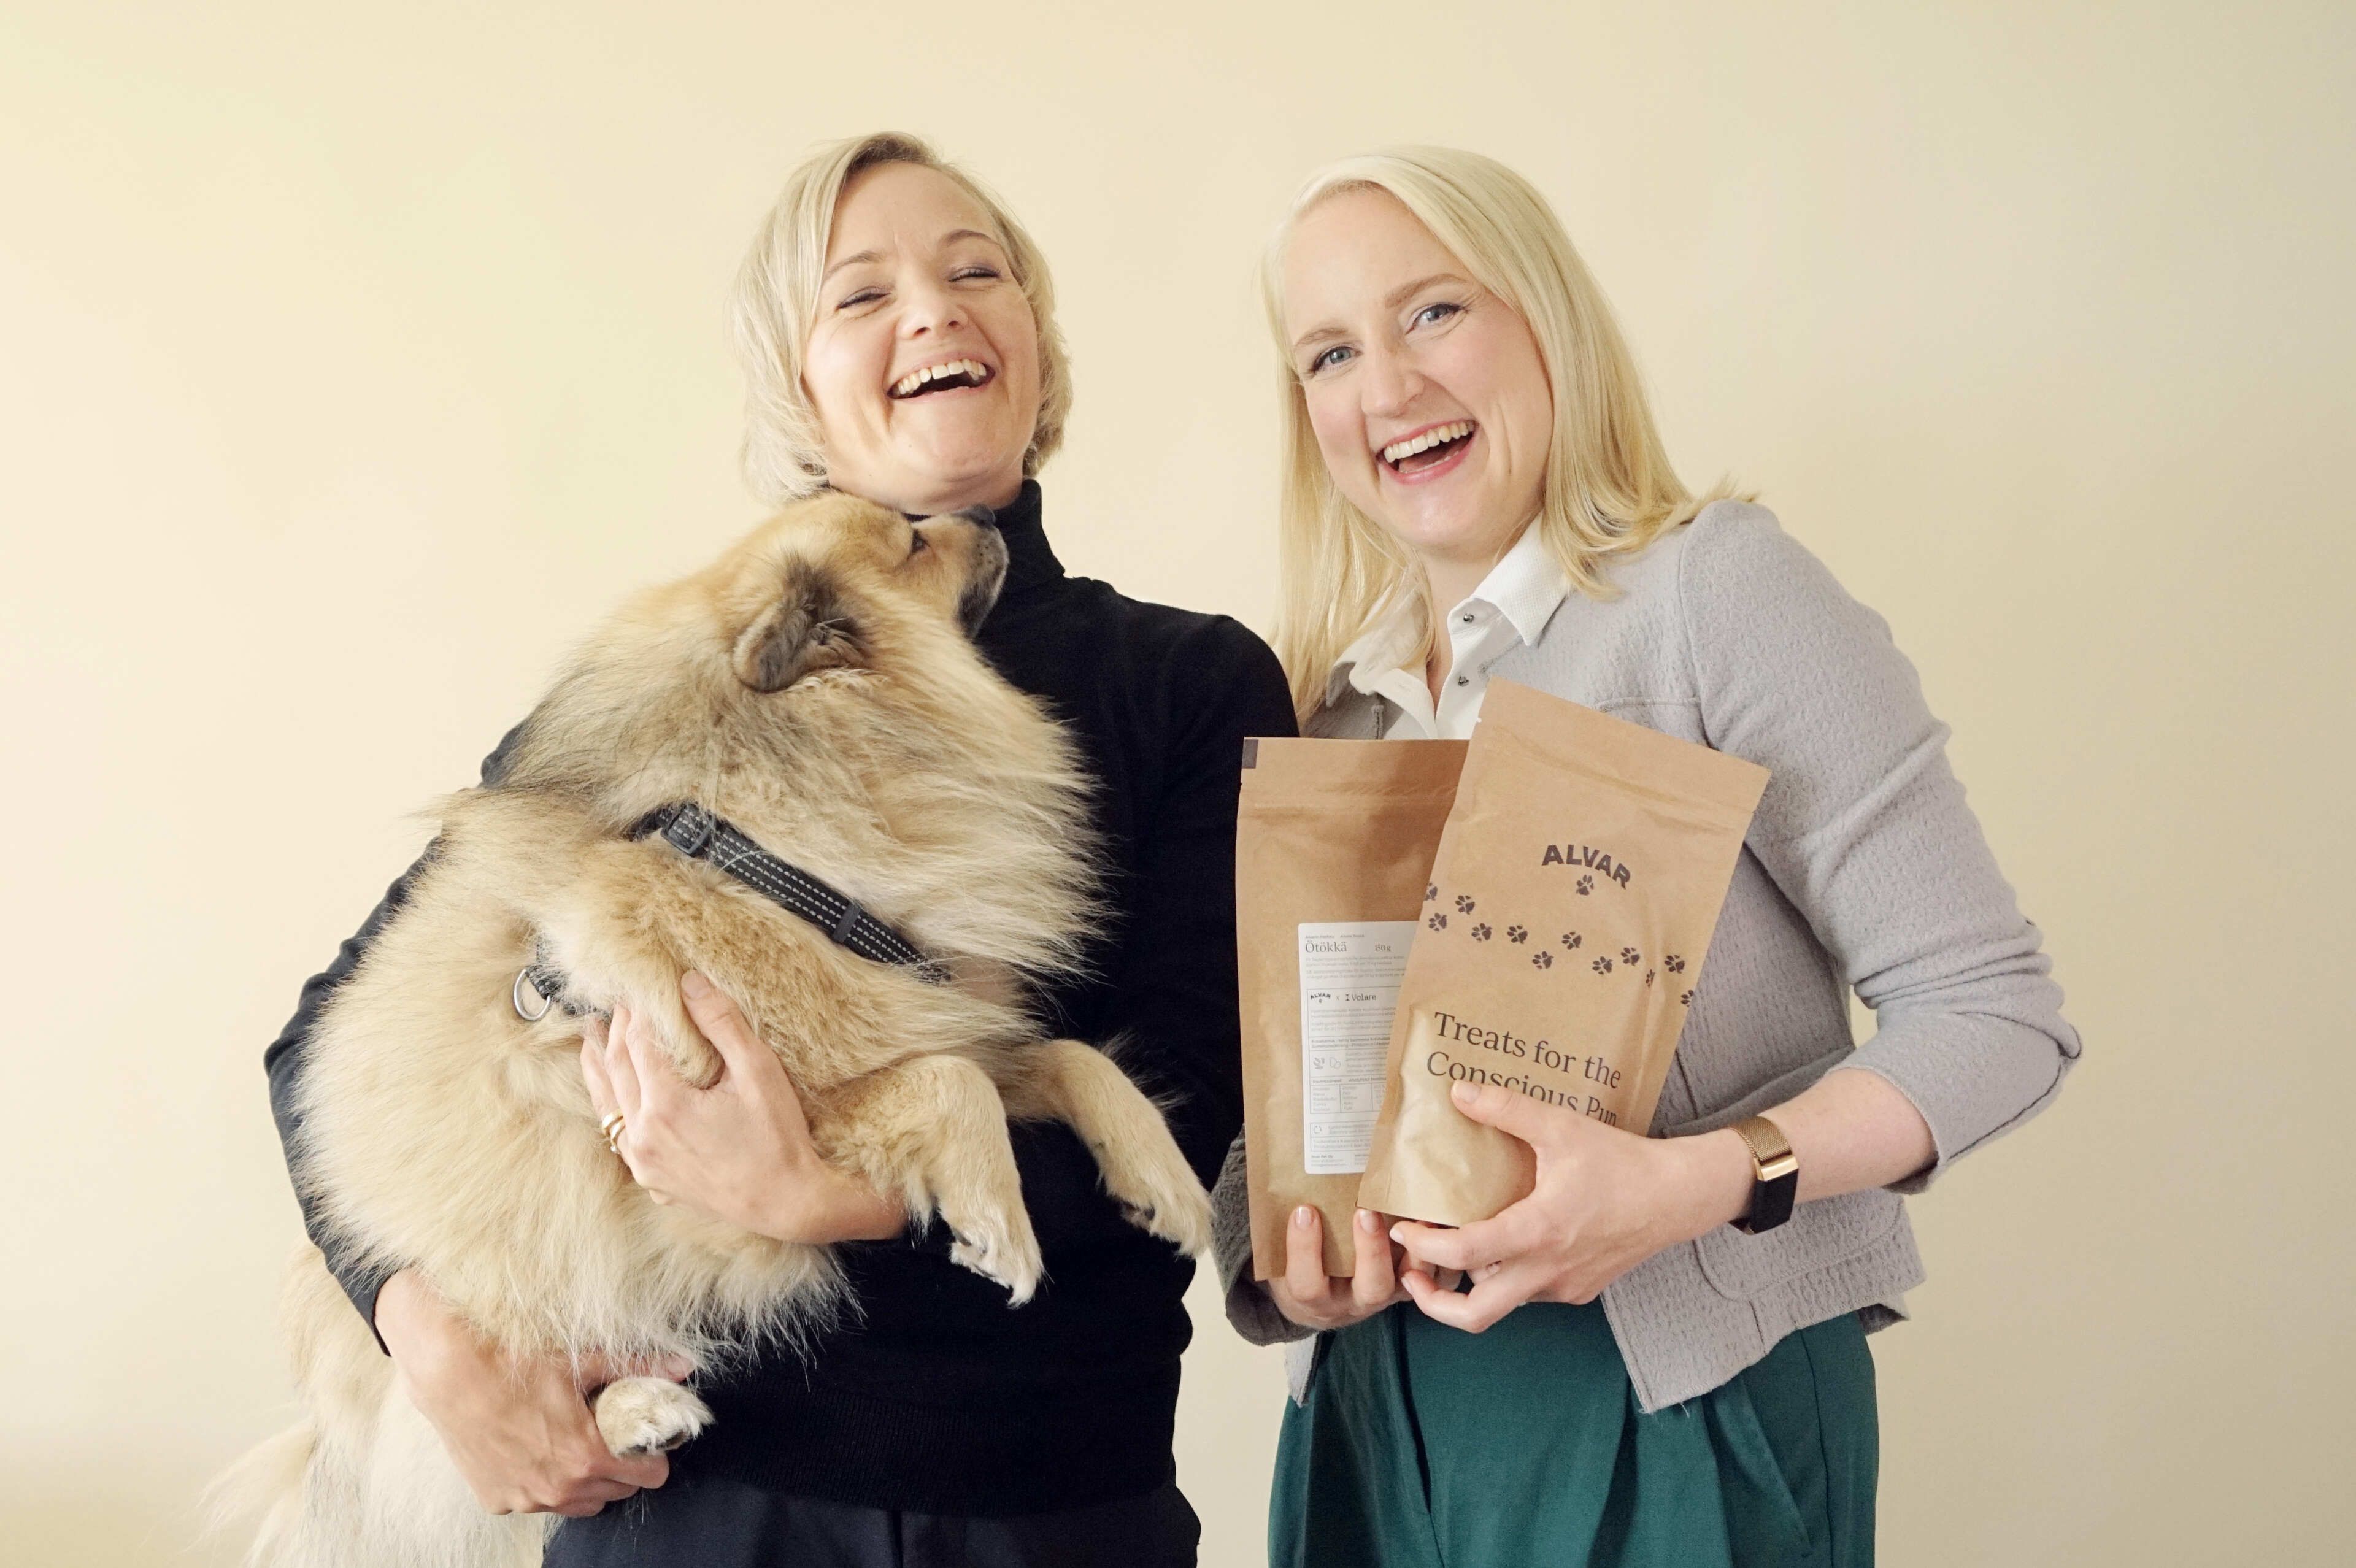 Laughing Alvar and Volare representatives holding Alvar treats and a fluffy dog 